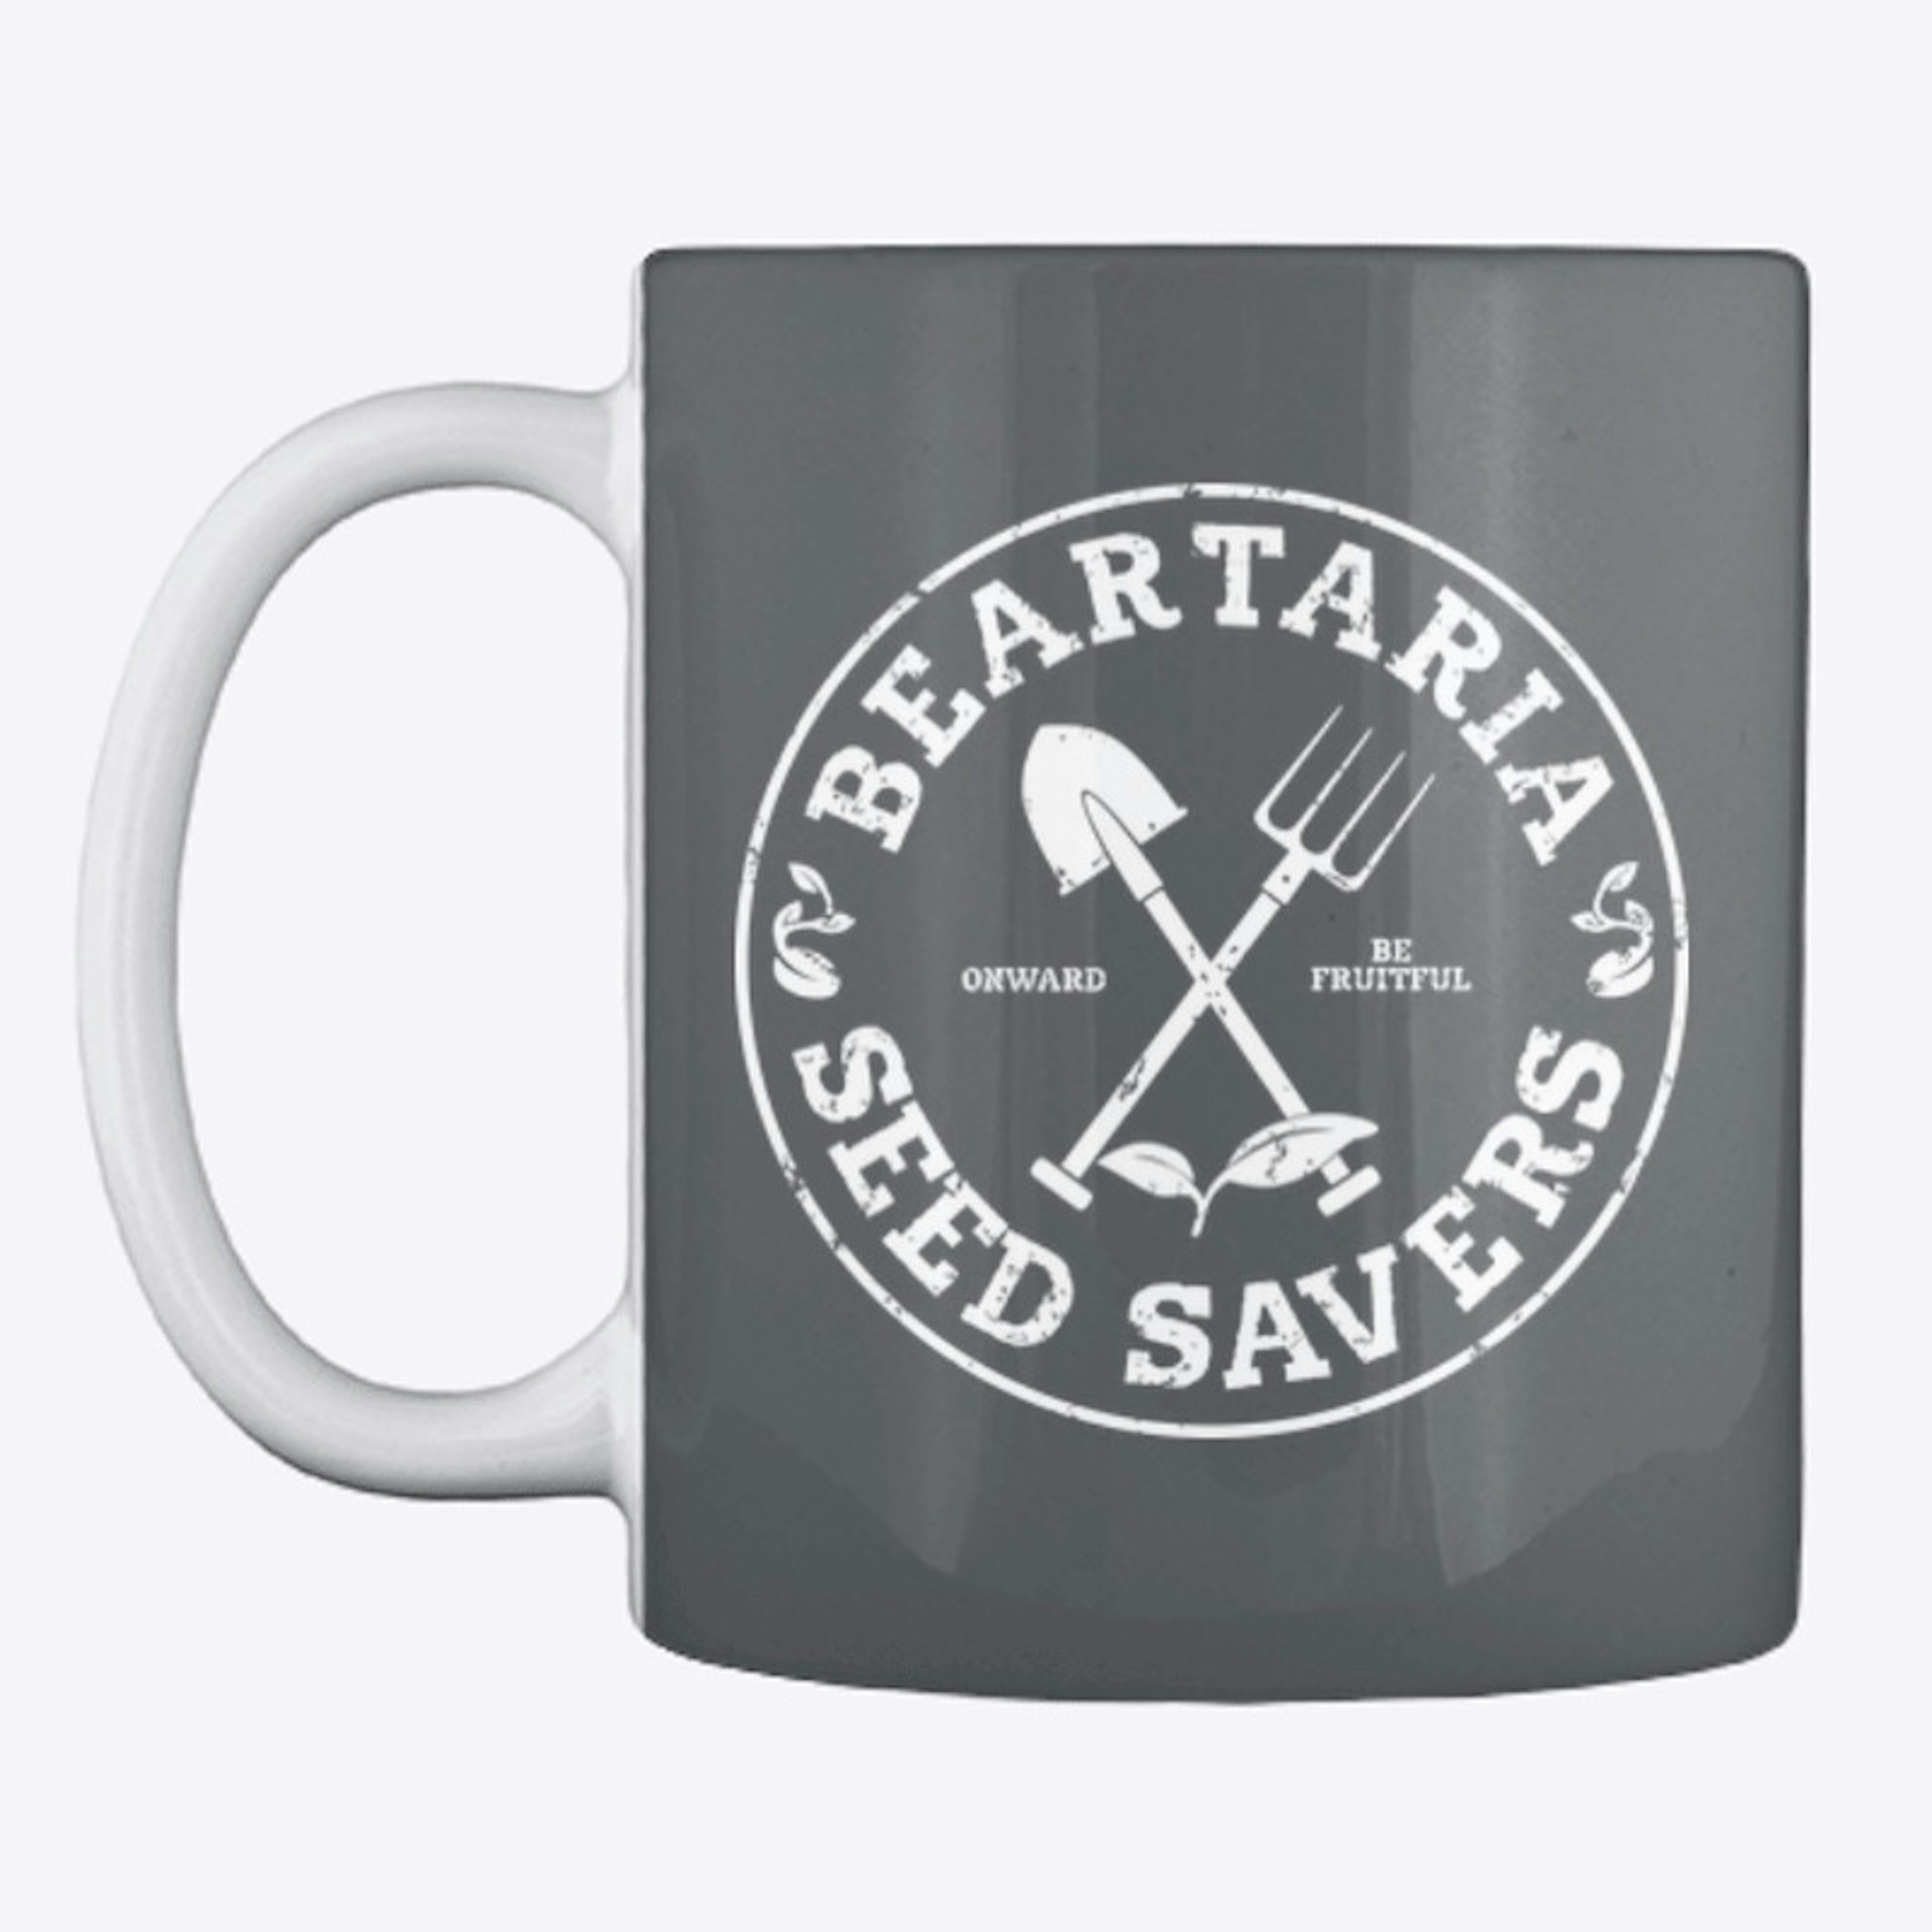 Beartaria Seed Savers mug